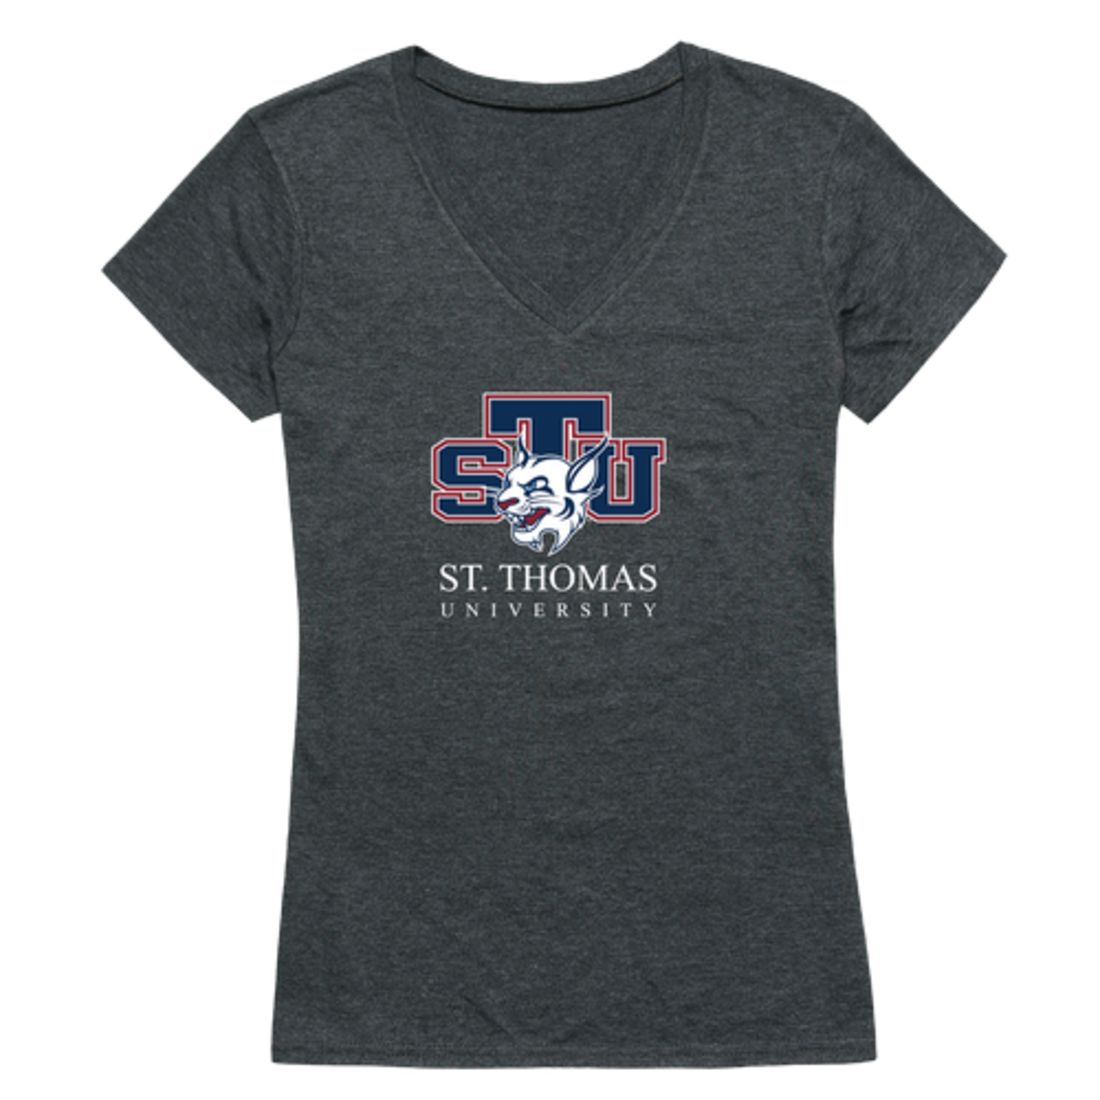 St. Thomas University Bobcats Womens Cinder T-Shirt Tee